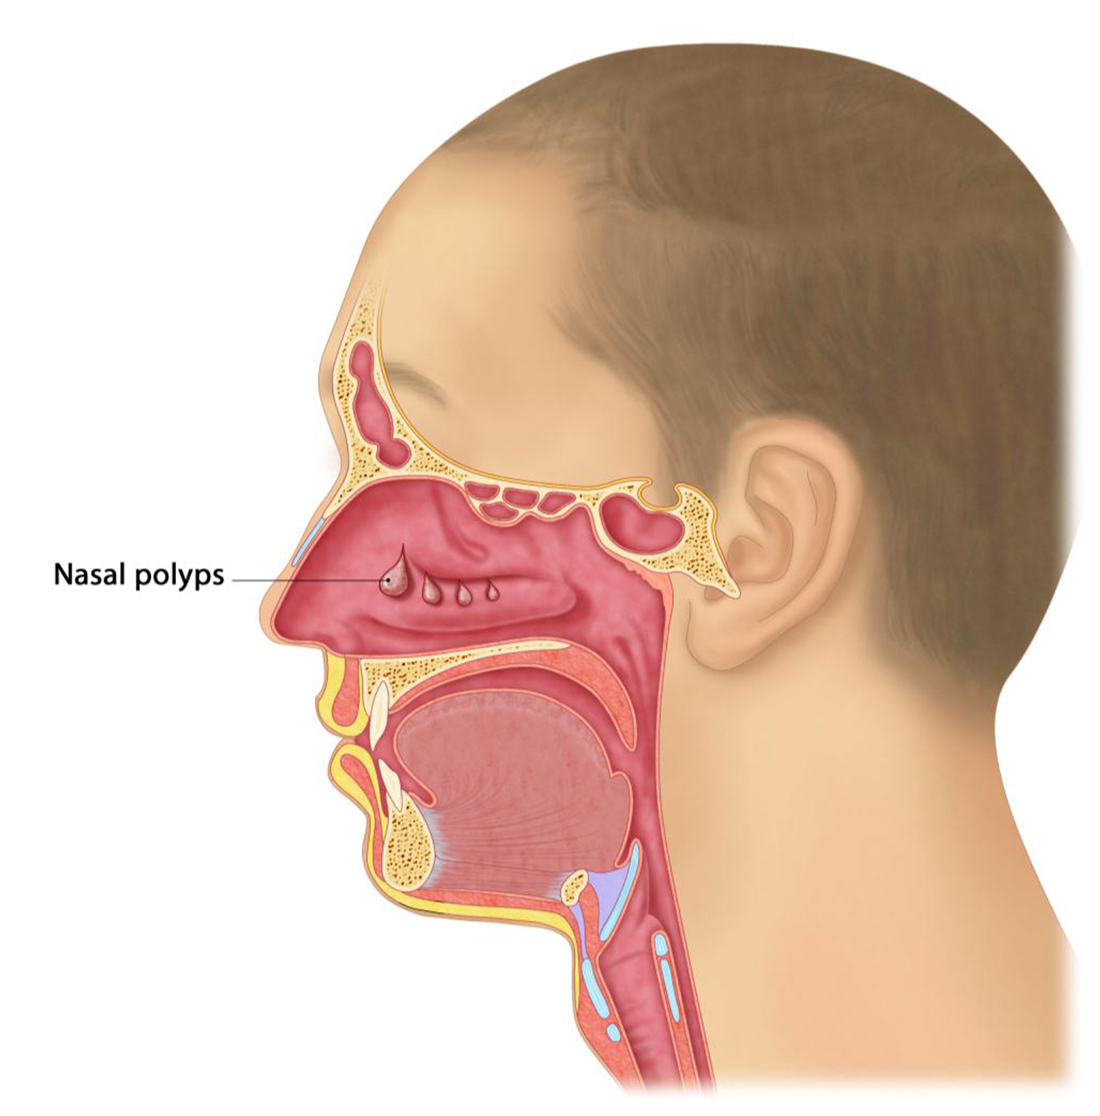 recurrent nasal polyps